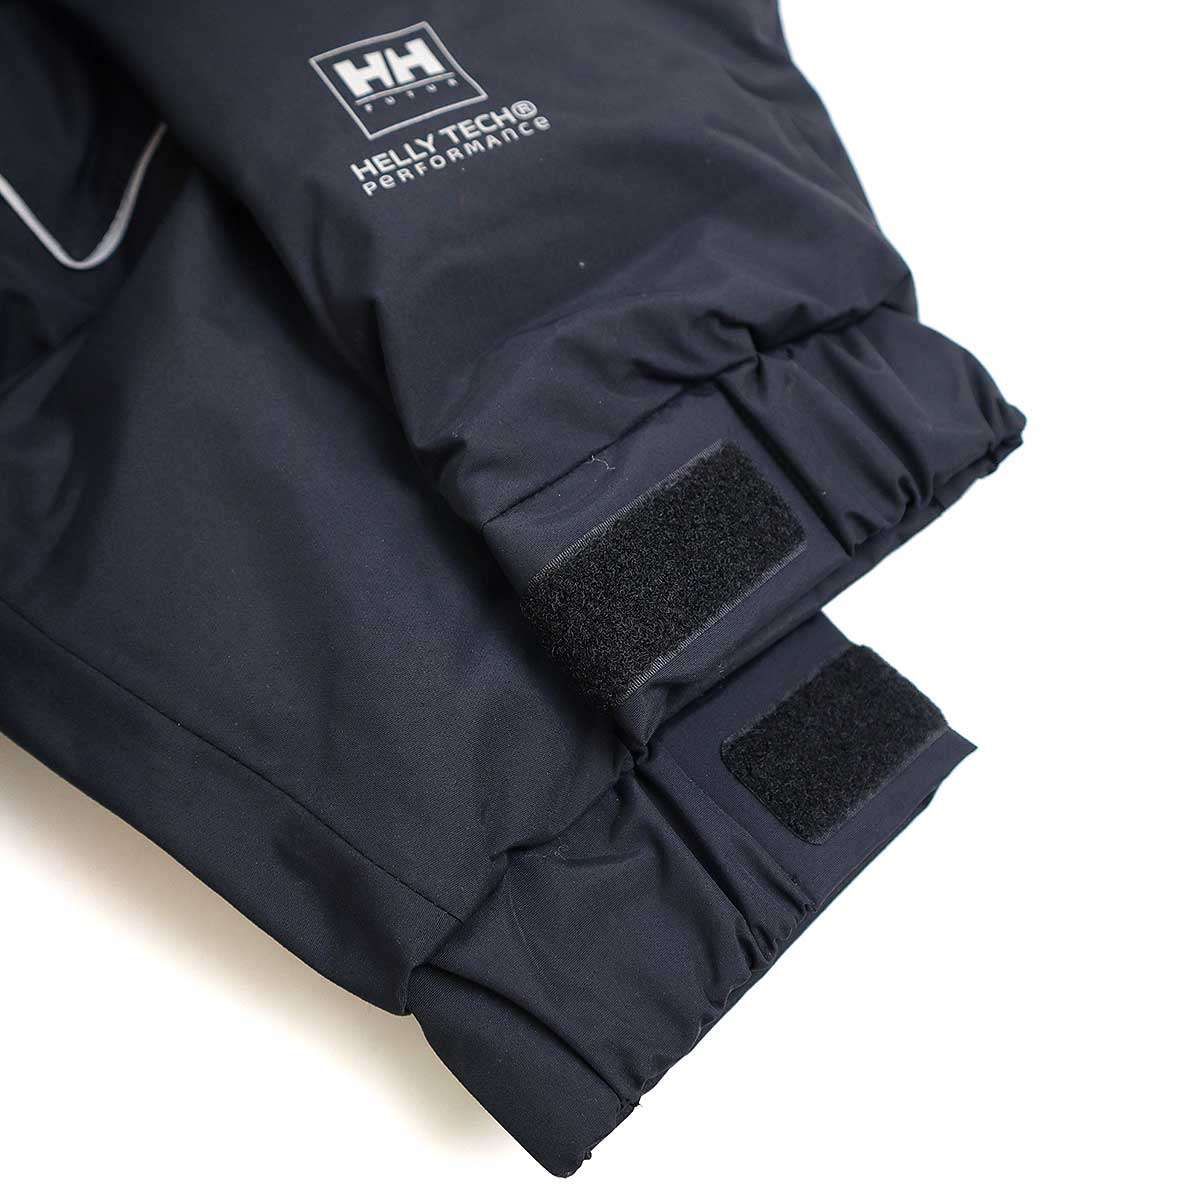 HELLY HANSEN×FUTUR ヘリーハンセン × フューチャー 23AW Ocean Balder Insulation Jacket  オーシャンバルドールインサレーションジャケット ブラック L HH12350FU